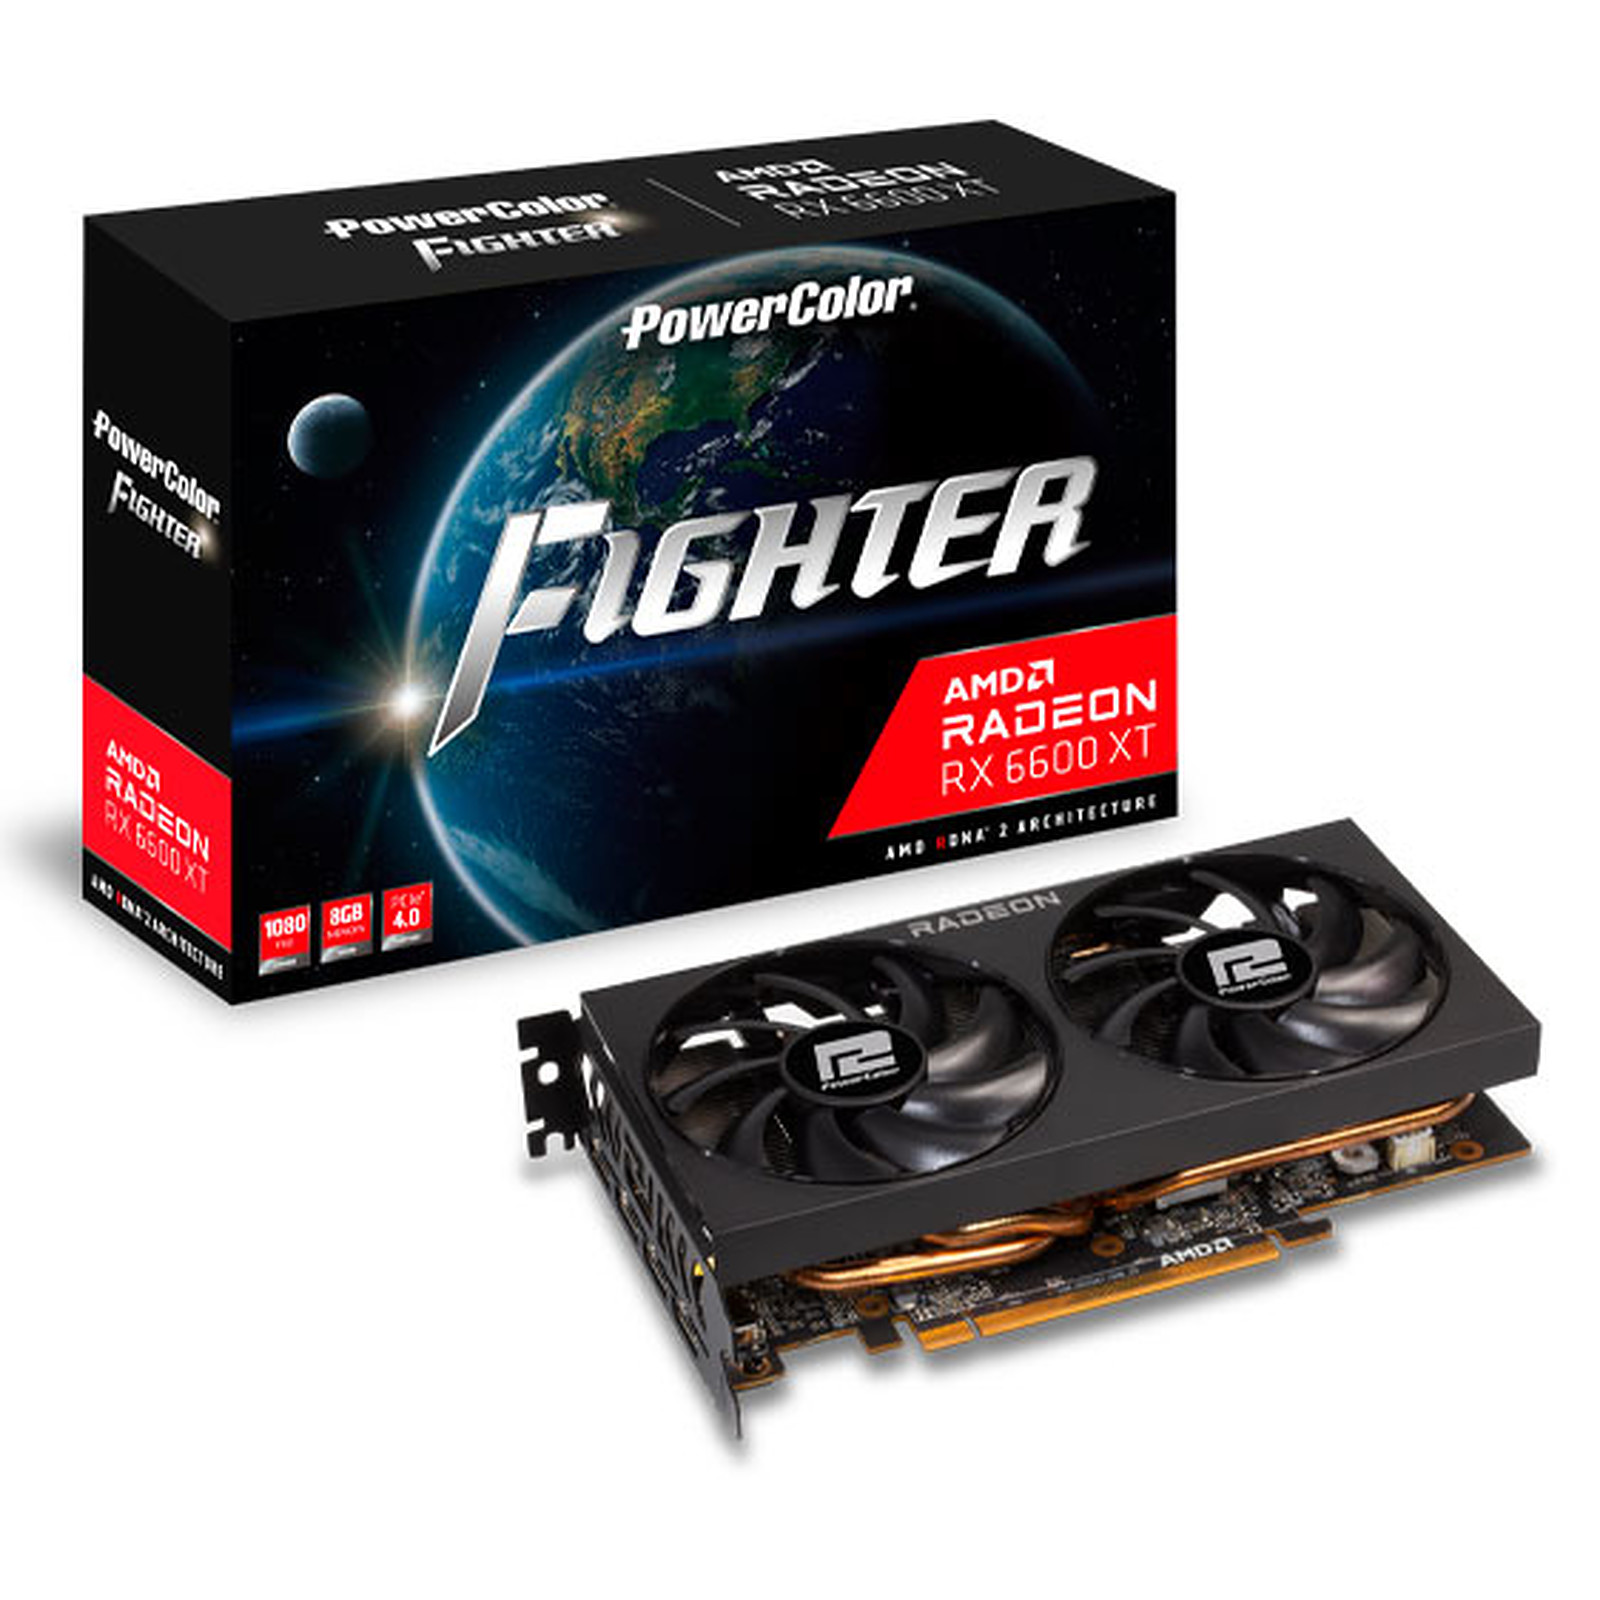 PowerColor Fighter AMD Radeon RX 6600 XT 8GB GDDR6 - Carte graphique PowerColor